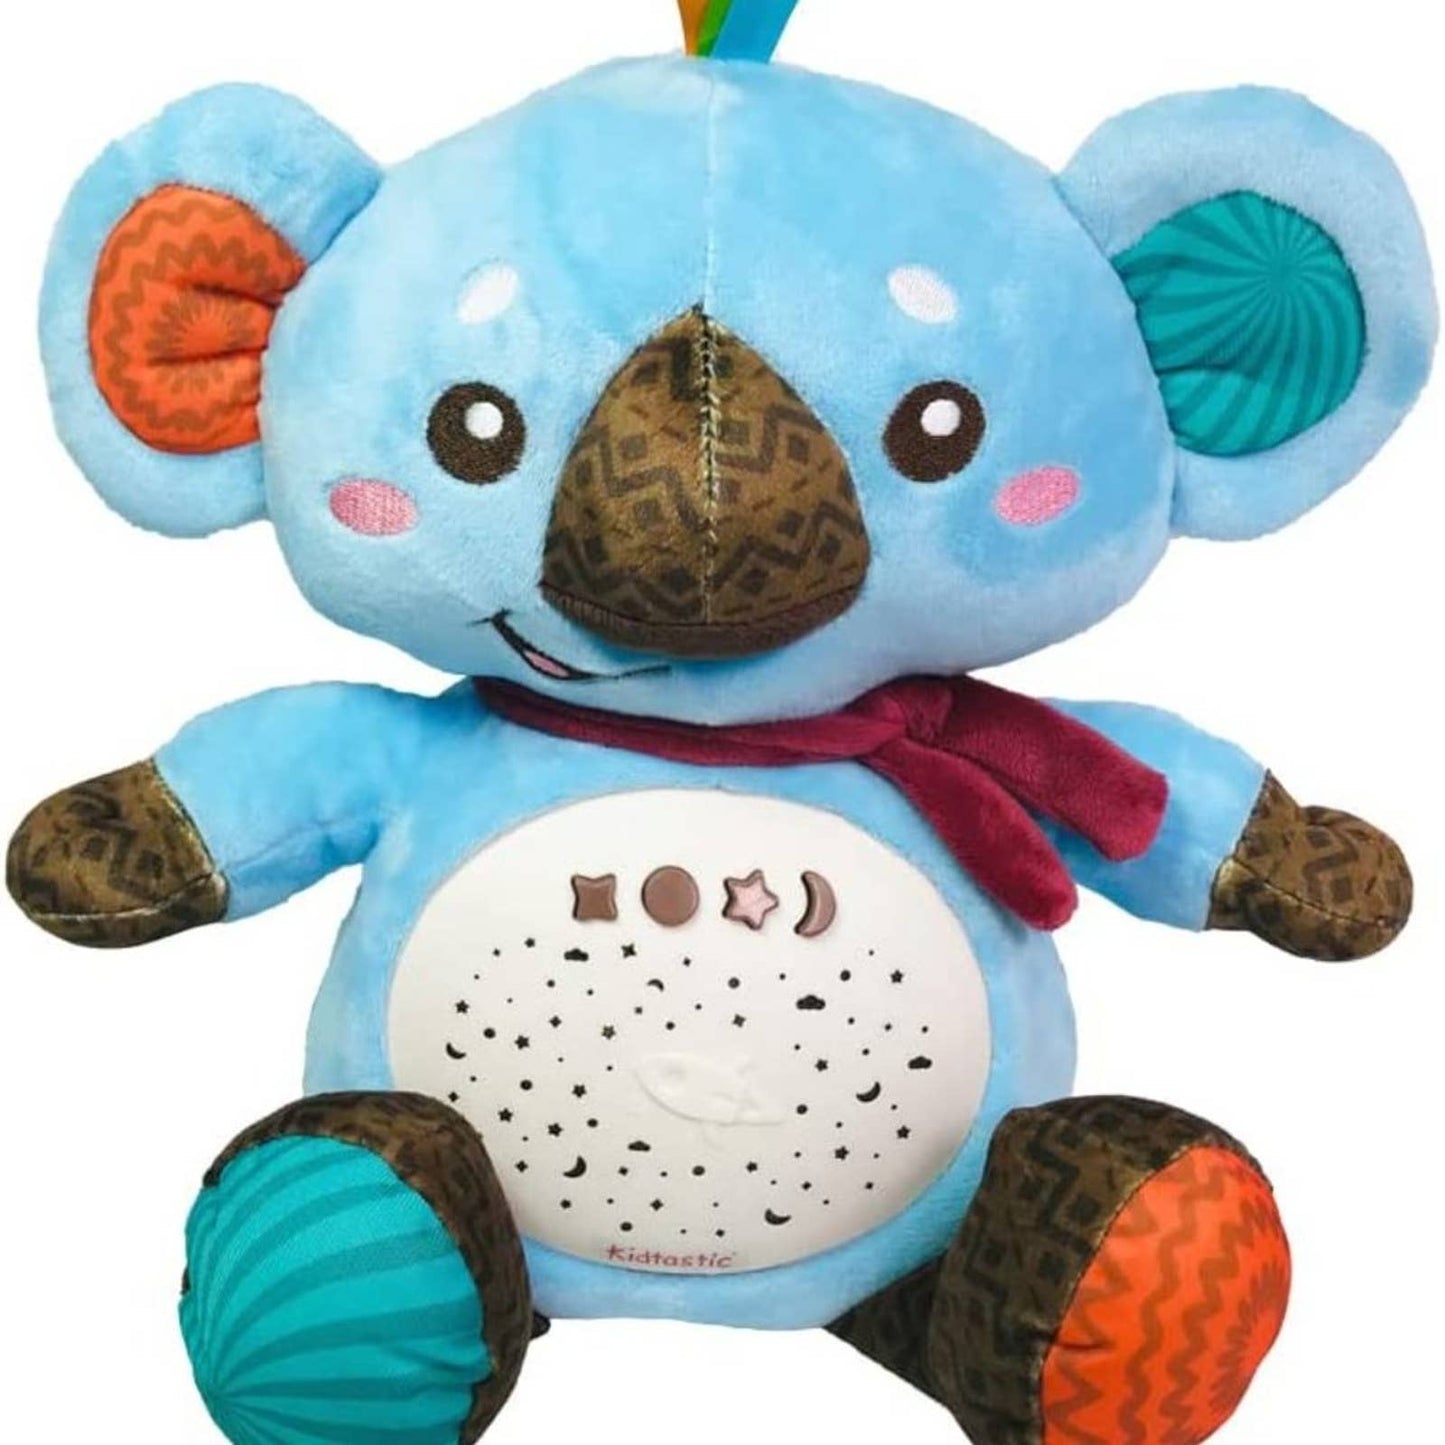 Kidtastic Koala Night Light Projector Stuffed Toy - Adorable & Educational